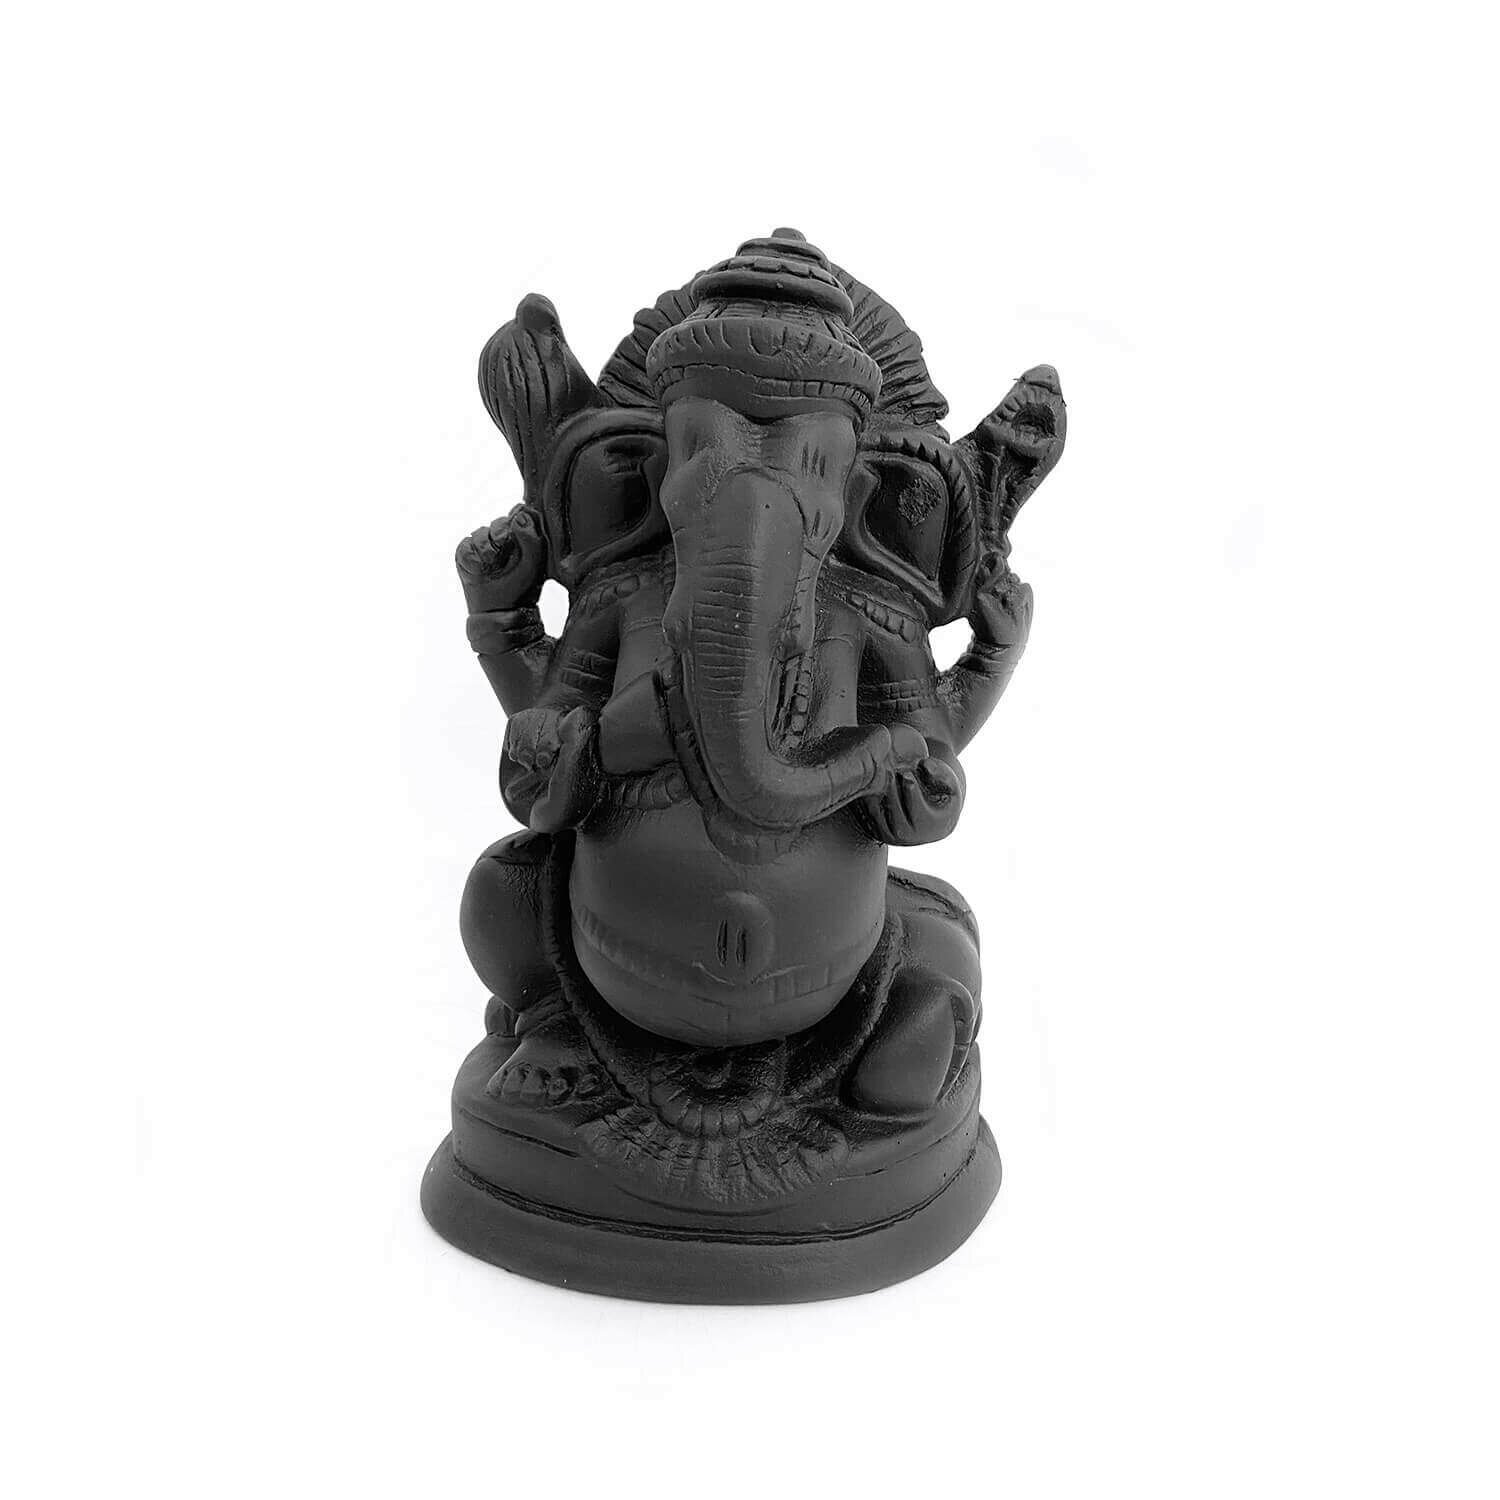 Estátua Ganesha Chakra 5